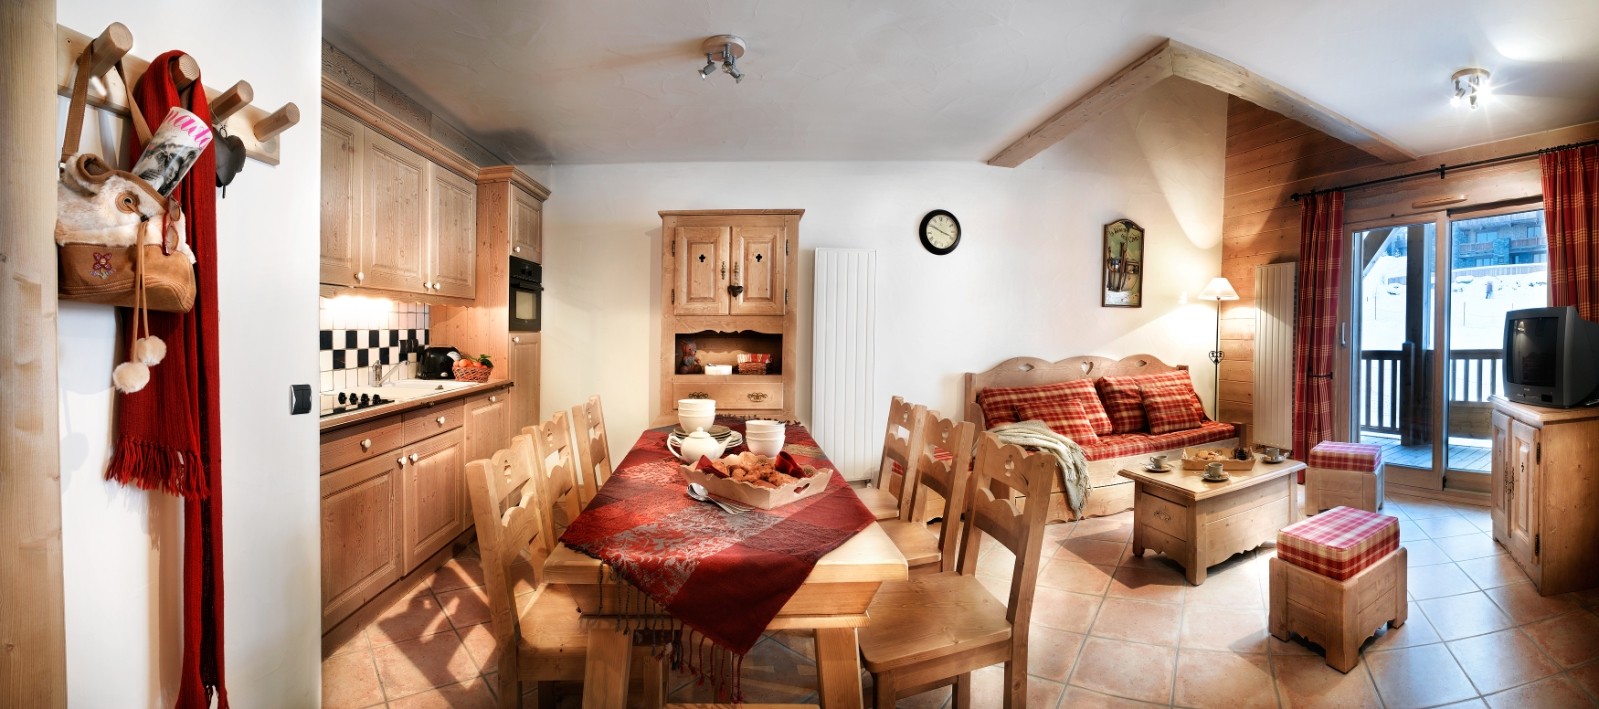 sainte-foy-tarentaise-location-appartement-luxe-love-stone-duplex